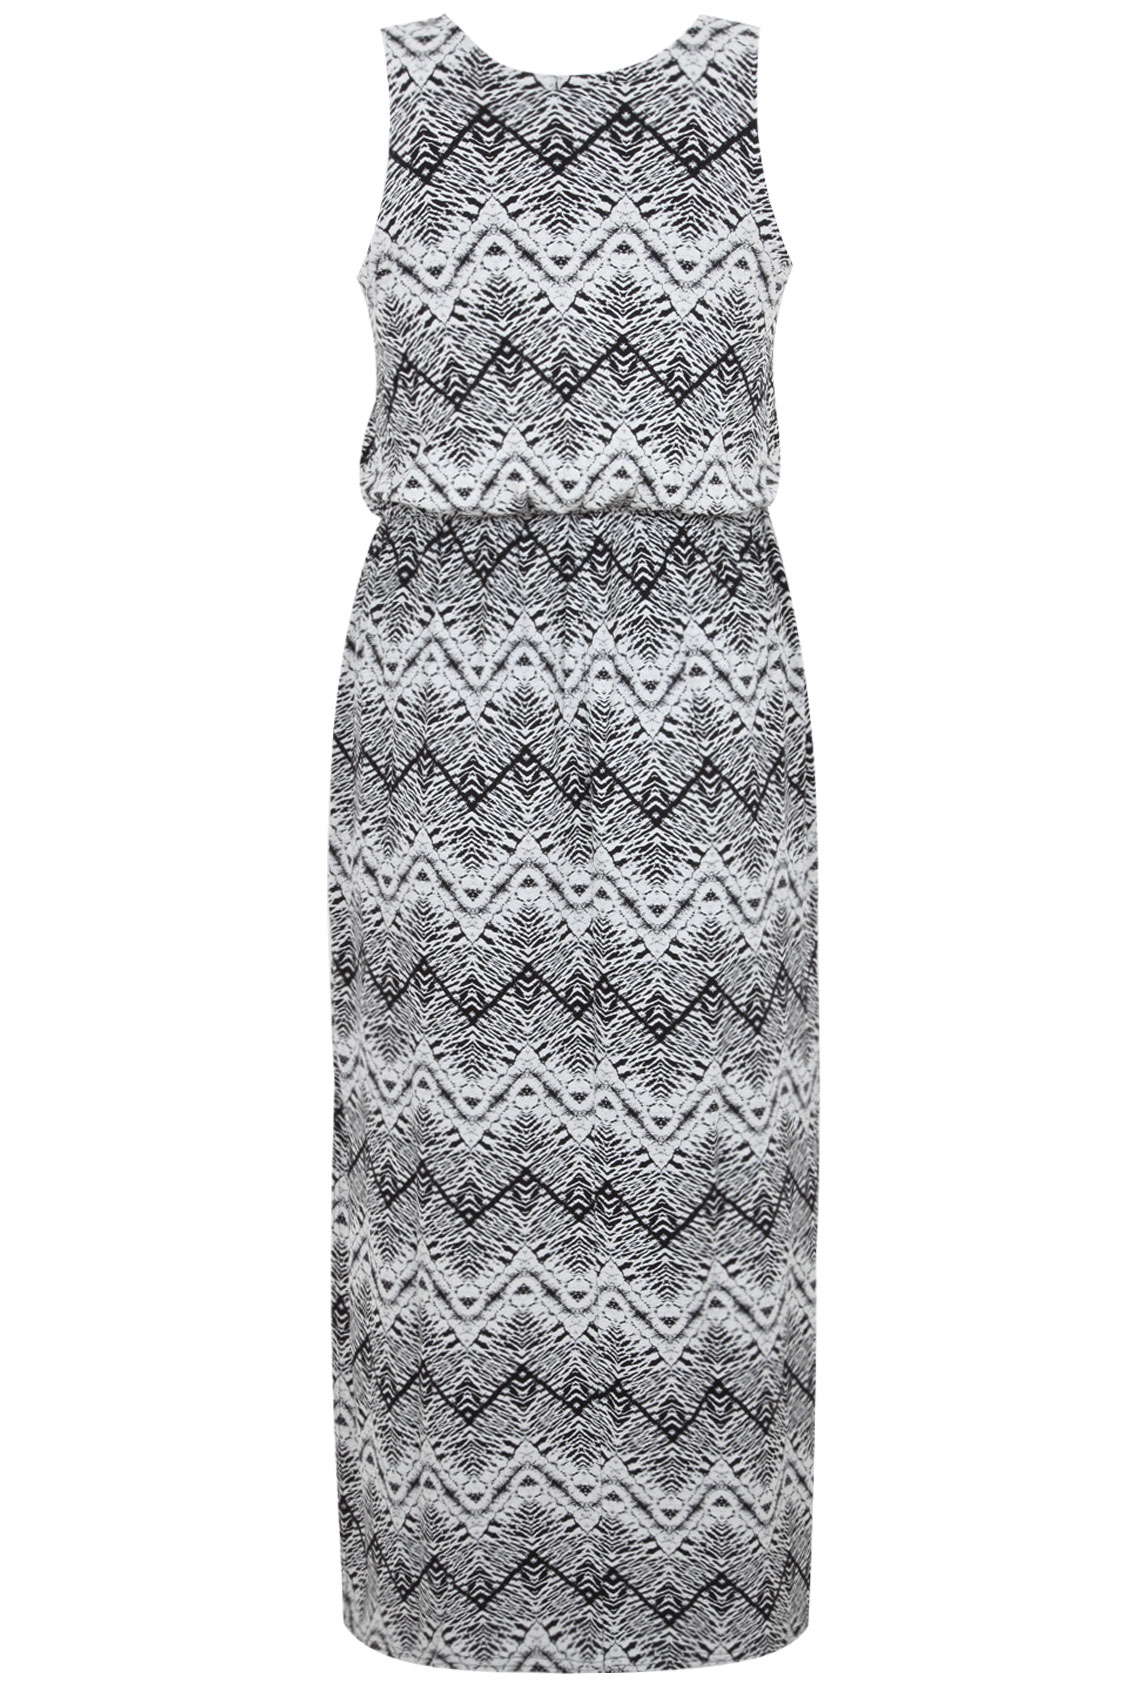 Cream & Black Tribal Print Blouson Jersey Maxi Dress plus size 14,16,18 ...